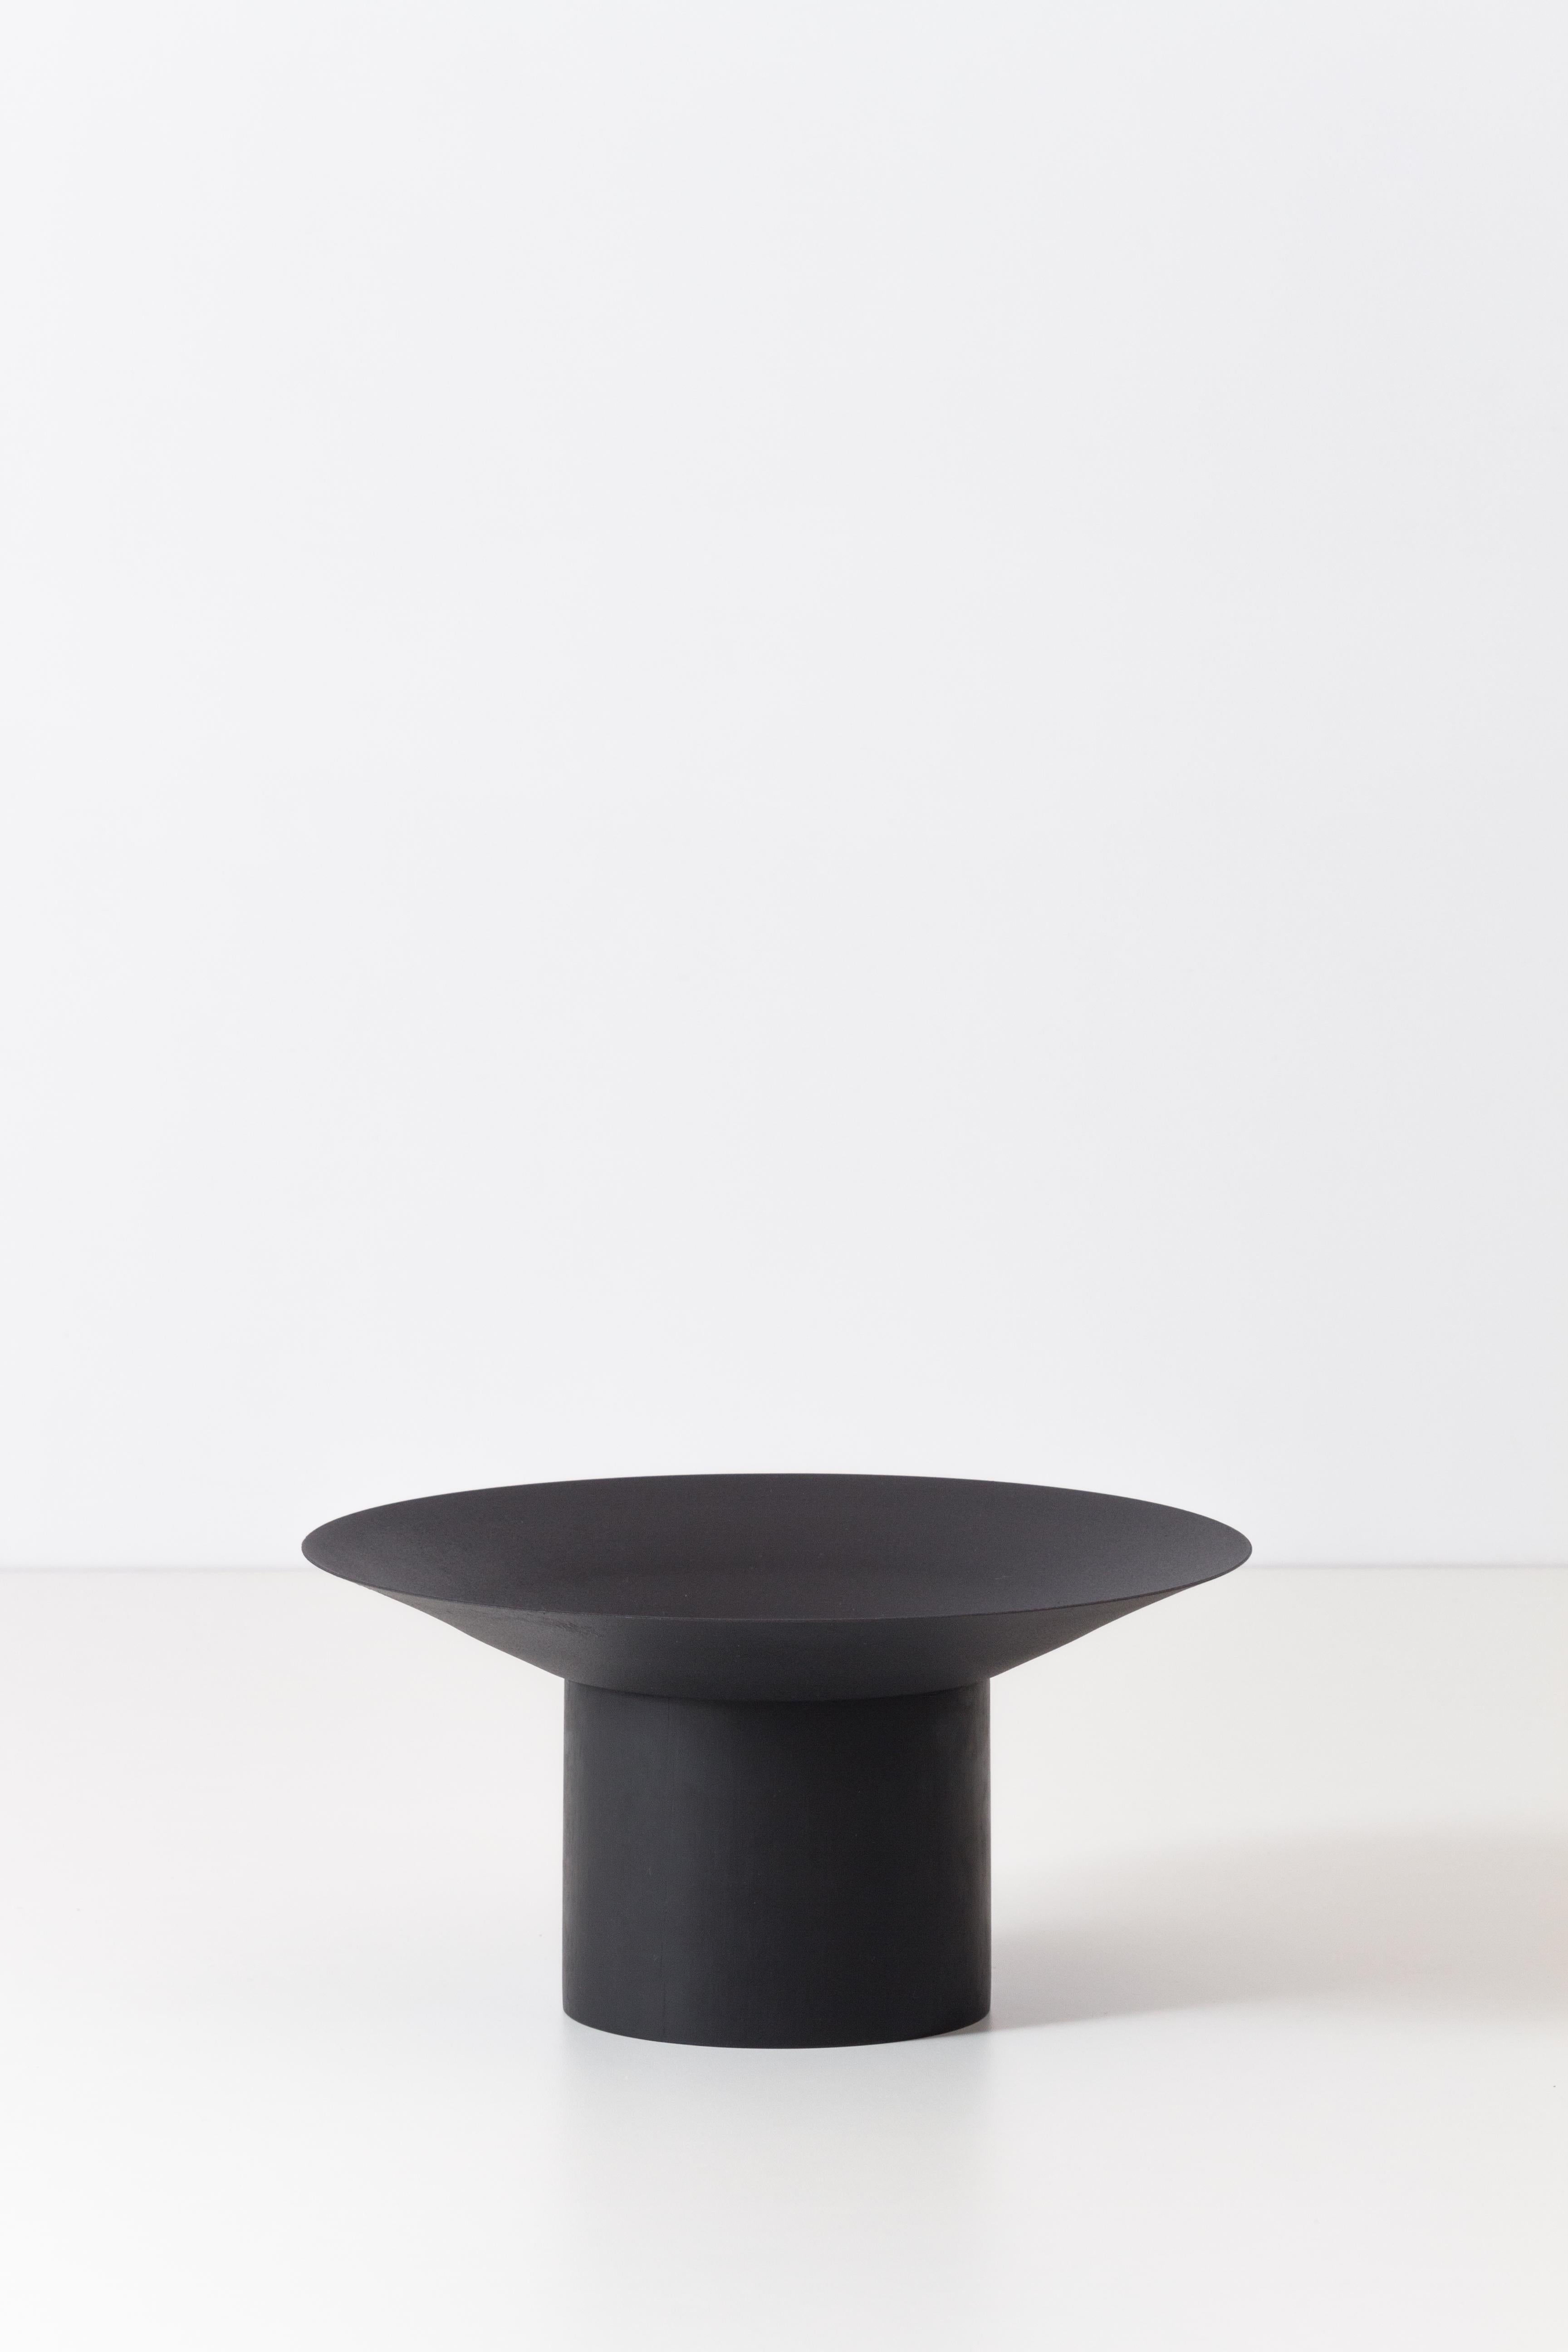 Dossel Collection (Set of 5) by Estúdio Dentro, Brazilian Contemporary Design For Sale 5